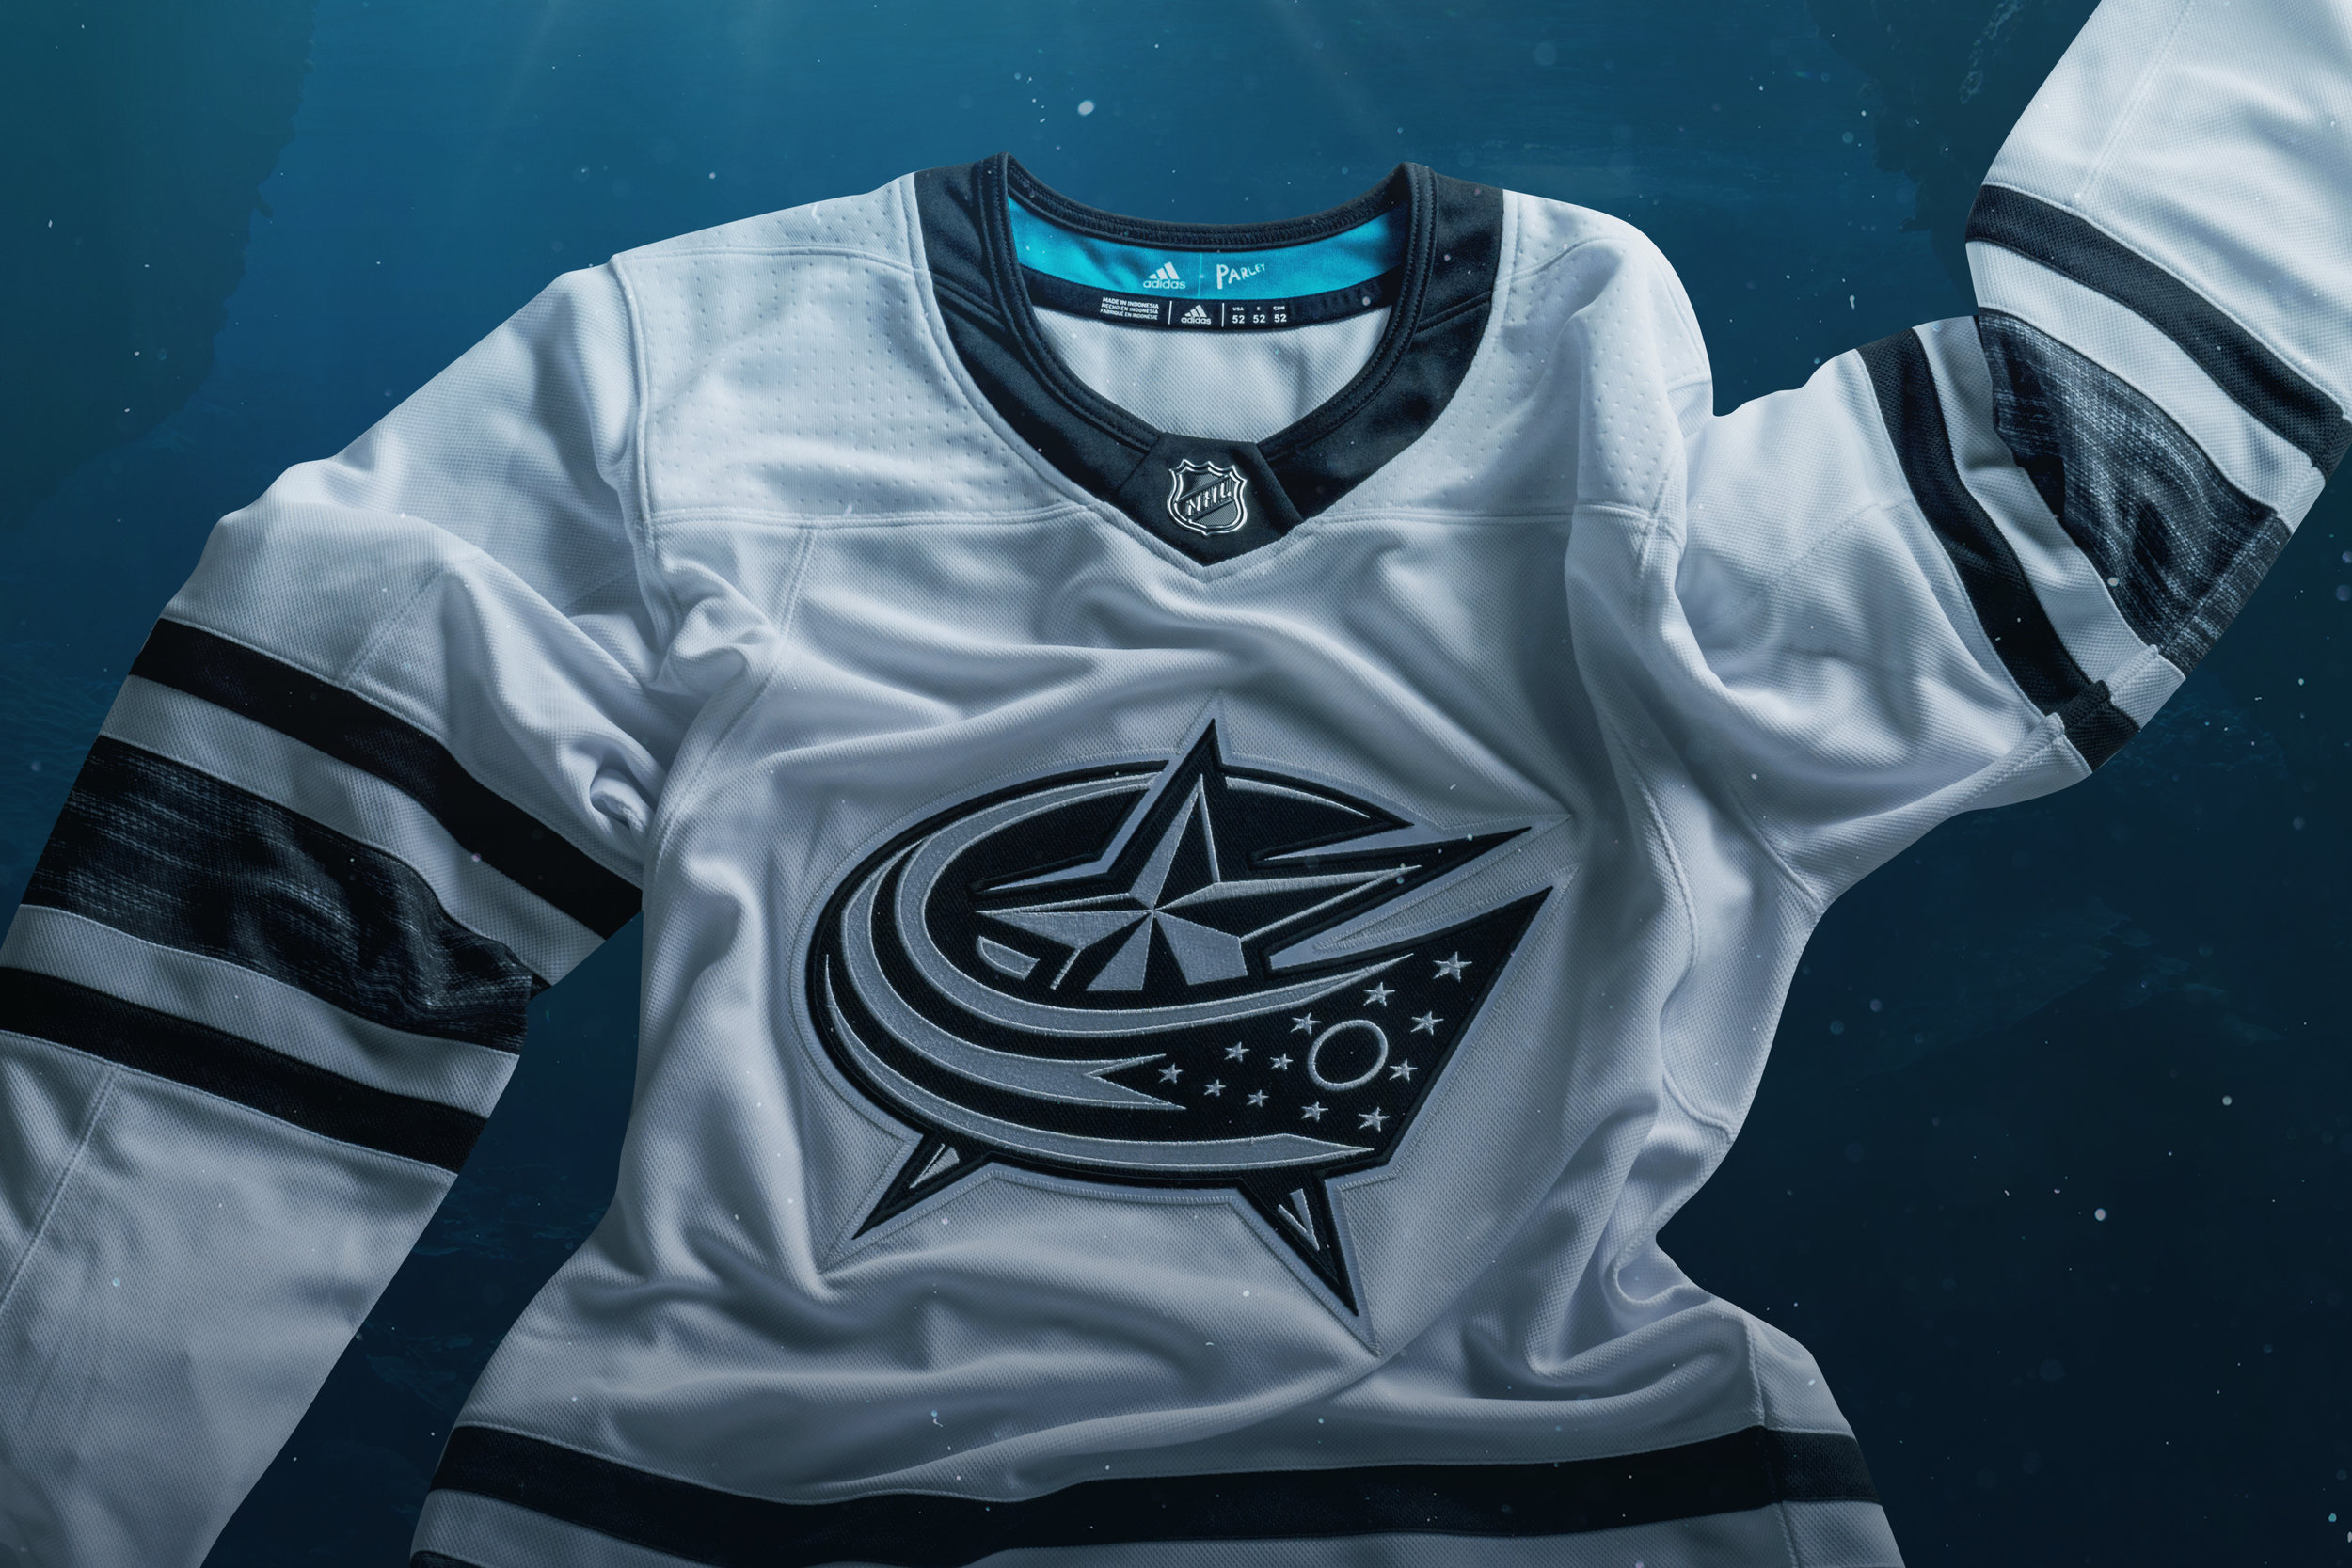 adidas & NHL unveil special edition ADIZERO authentic pro Jerseys